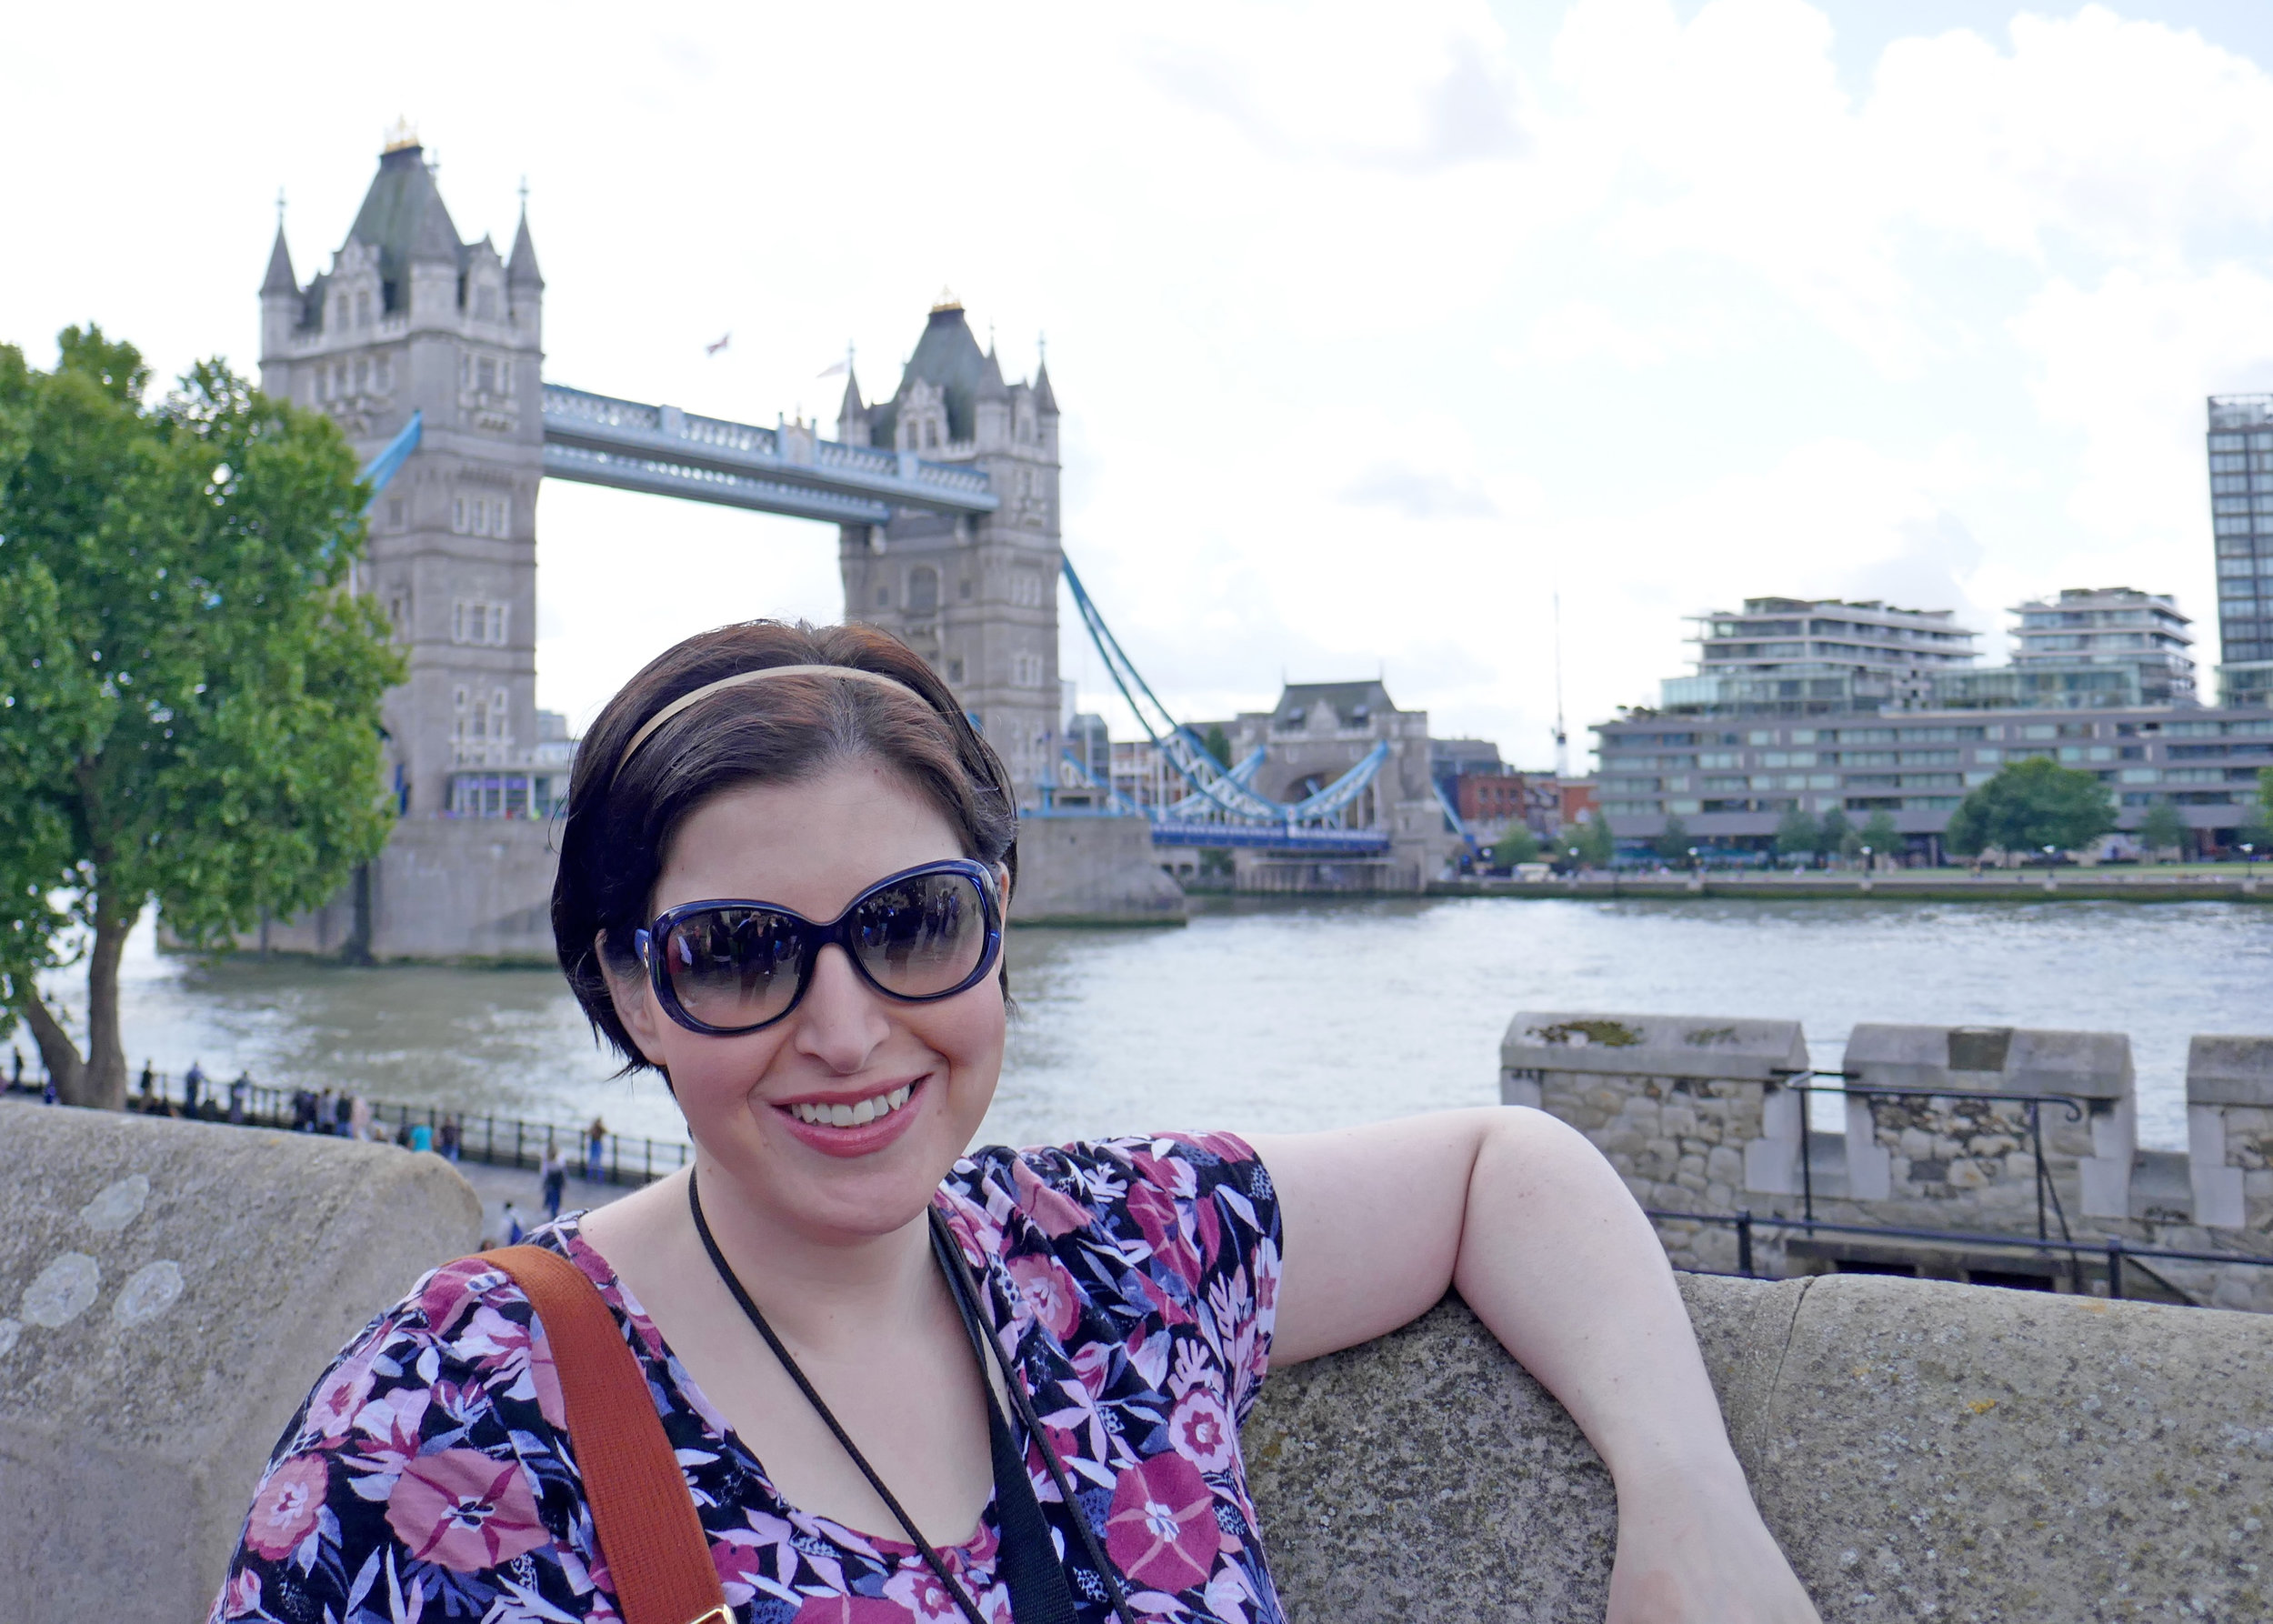 In front of Tower Bridge in London